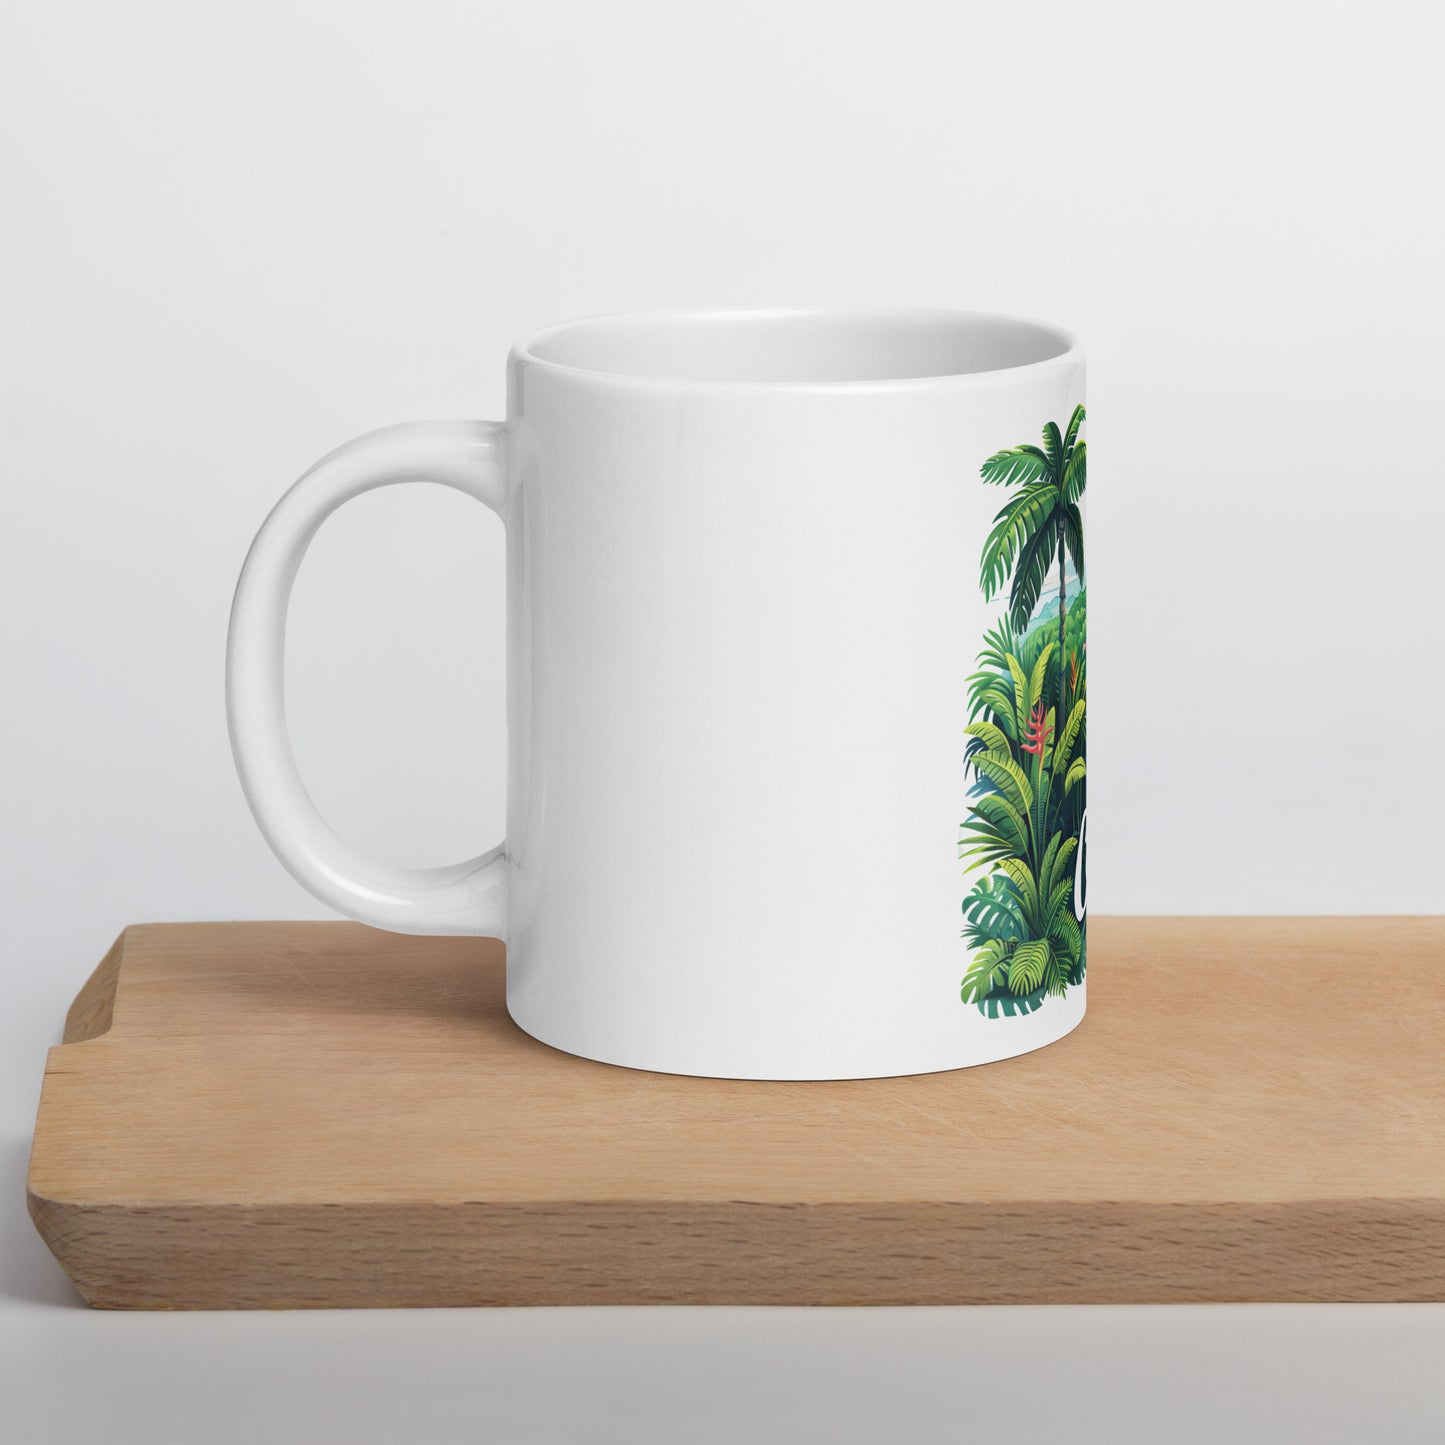 Costa Rica Rainforest Coffee Mug